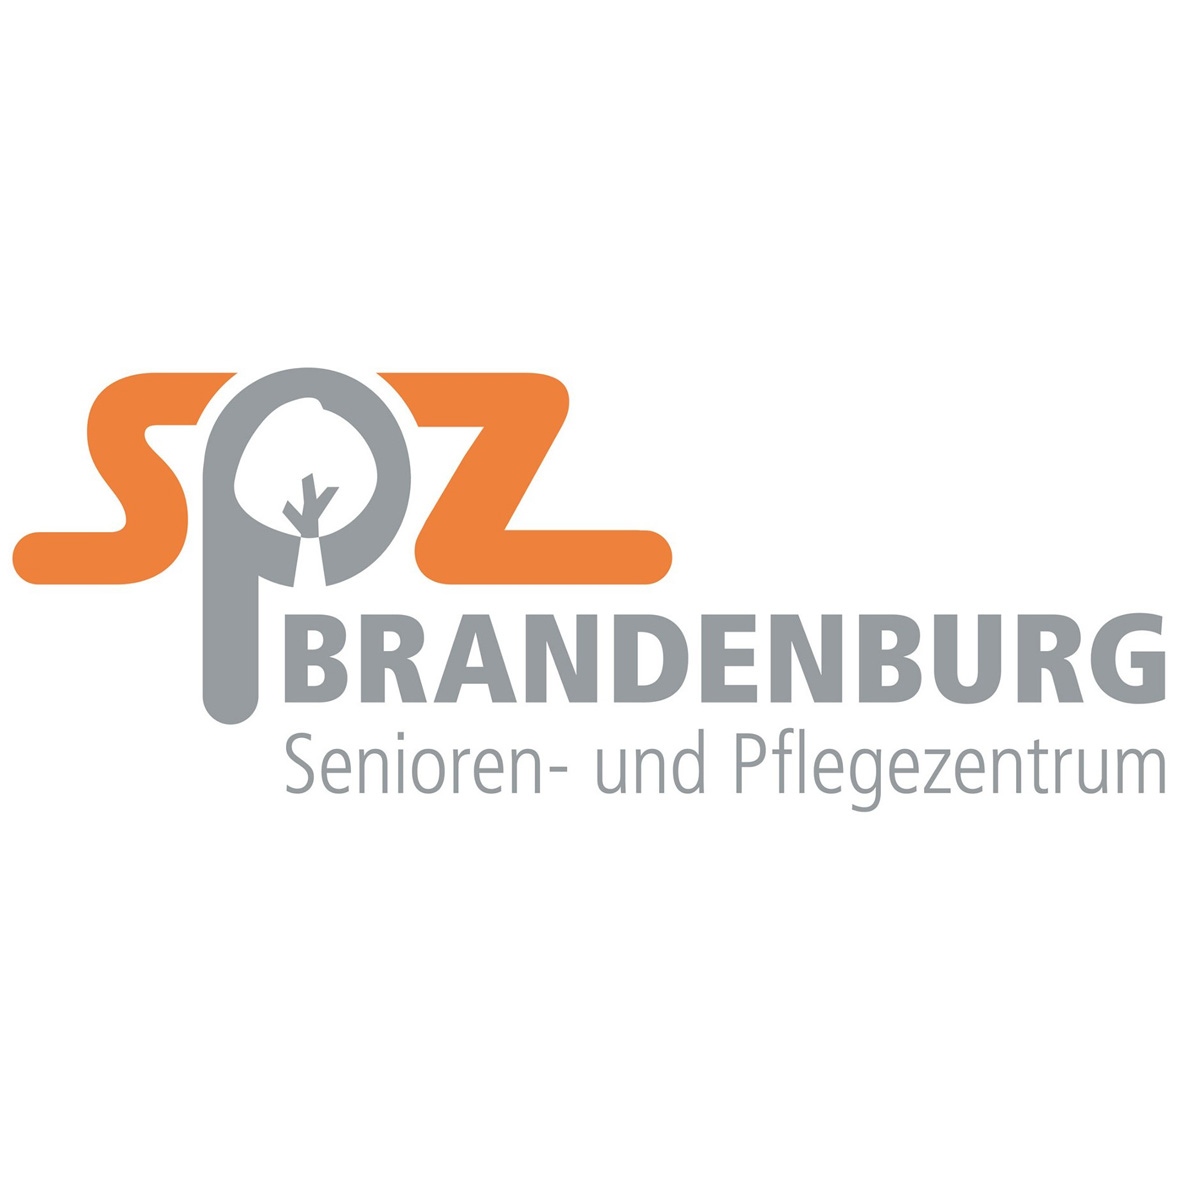 SPZ Brandenburg